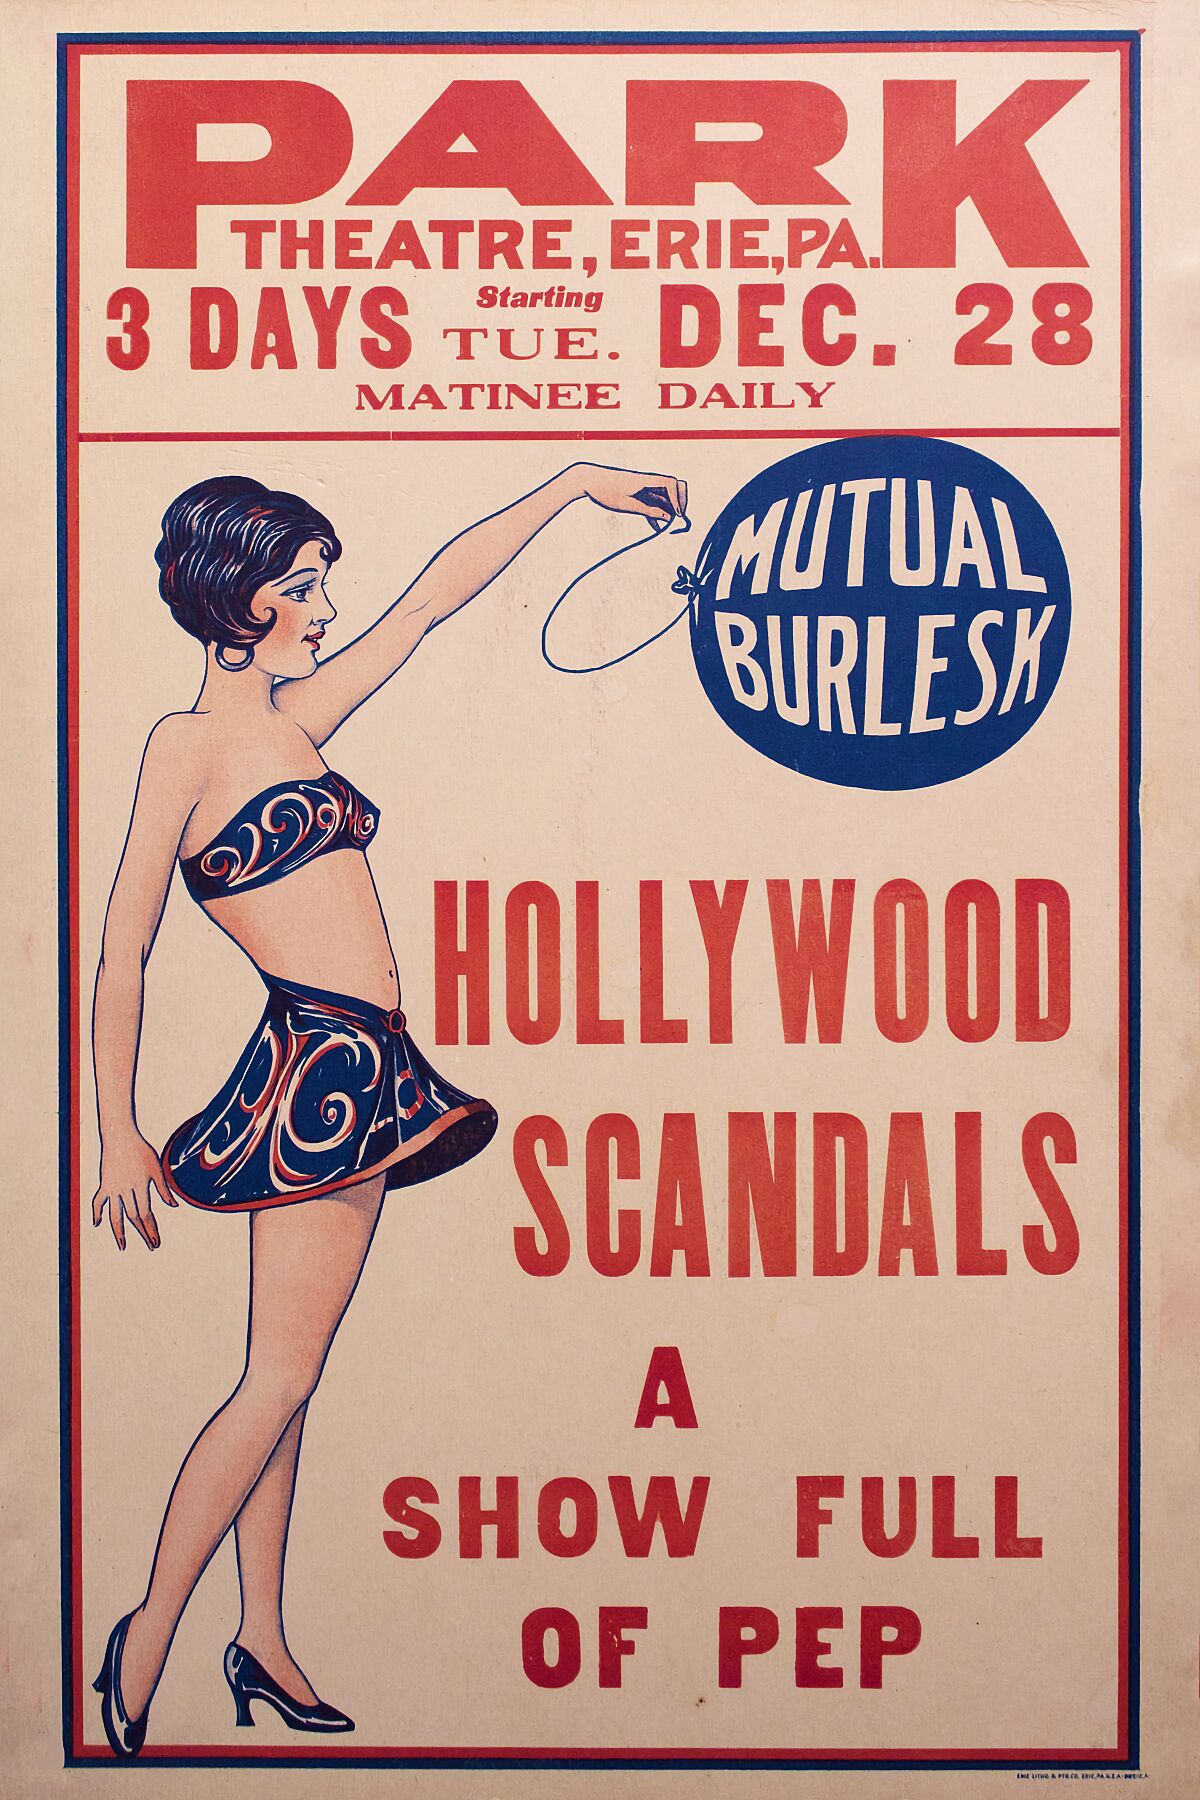 Hollywood Scandals Mutual Burlesque - Carte de fenêtre de 1926 Poster 